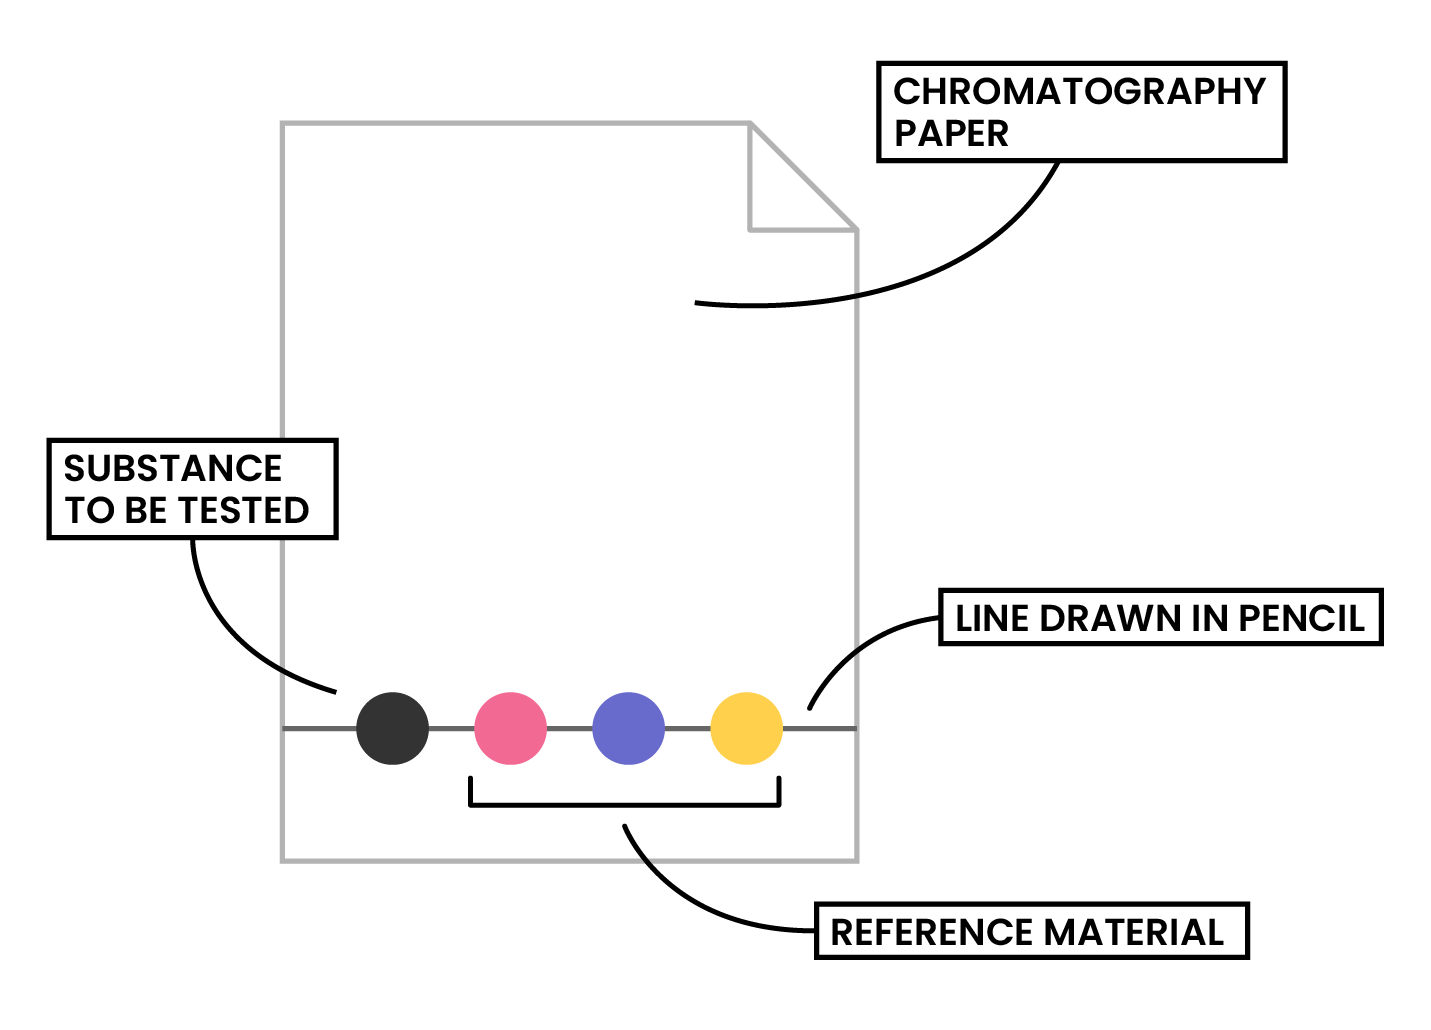 edexcel_igcse_chemistry_topic 02_elements, compounds, and mixtures_006_paper chromatography labelled diagram